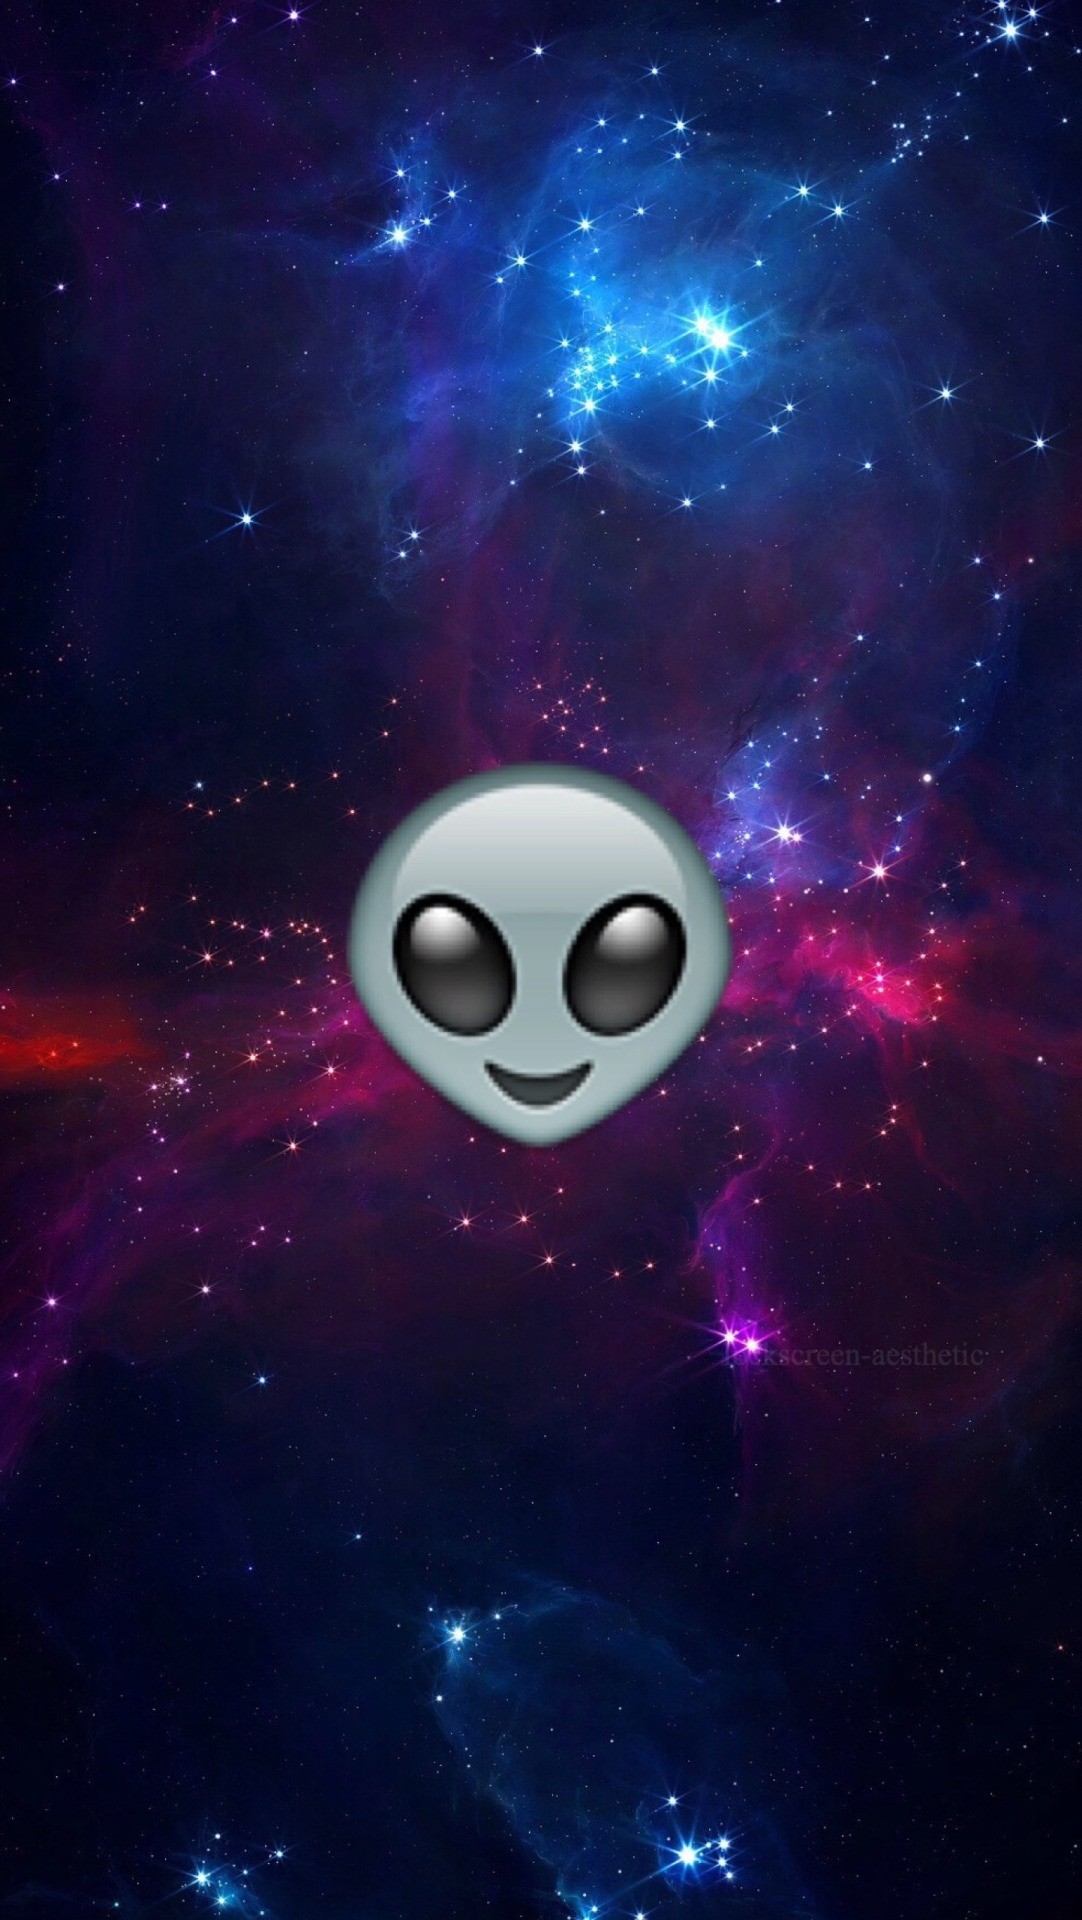 1082x1920 ufo alien lockscreen aesthetic lockscreen aesthetic Galaxy emoji ...